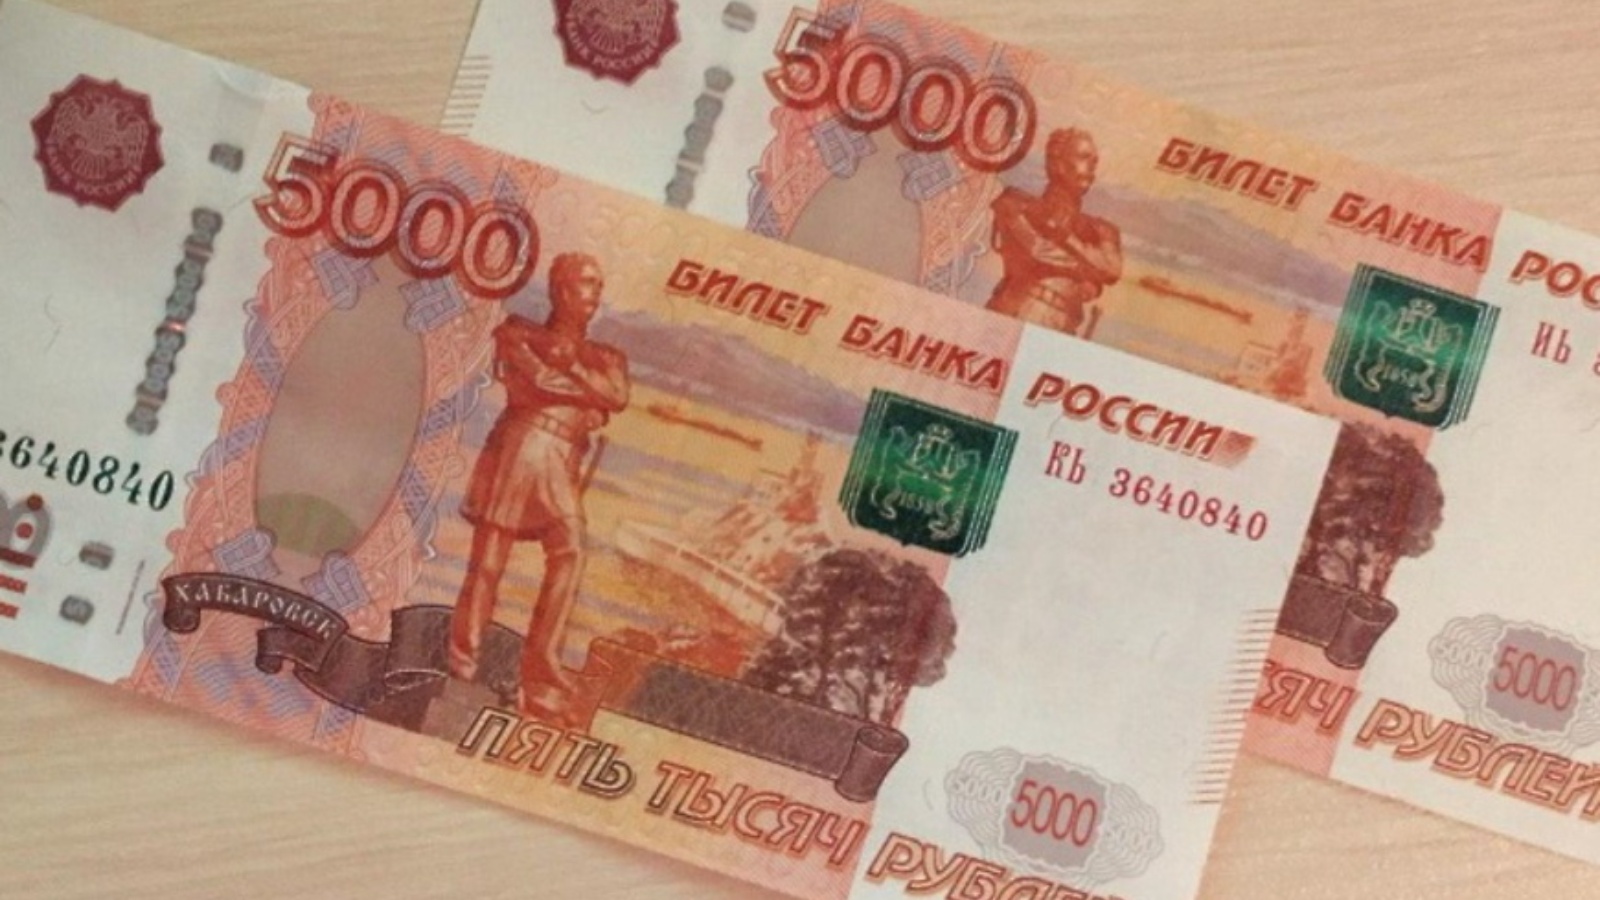 5000 рублей школьникам